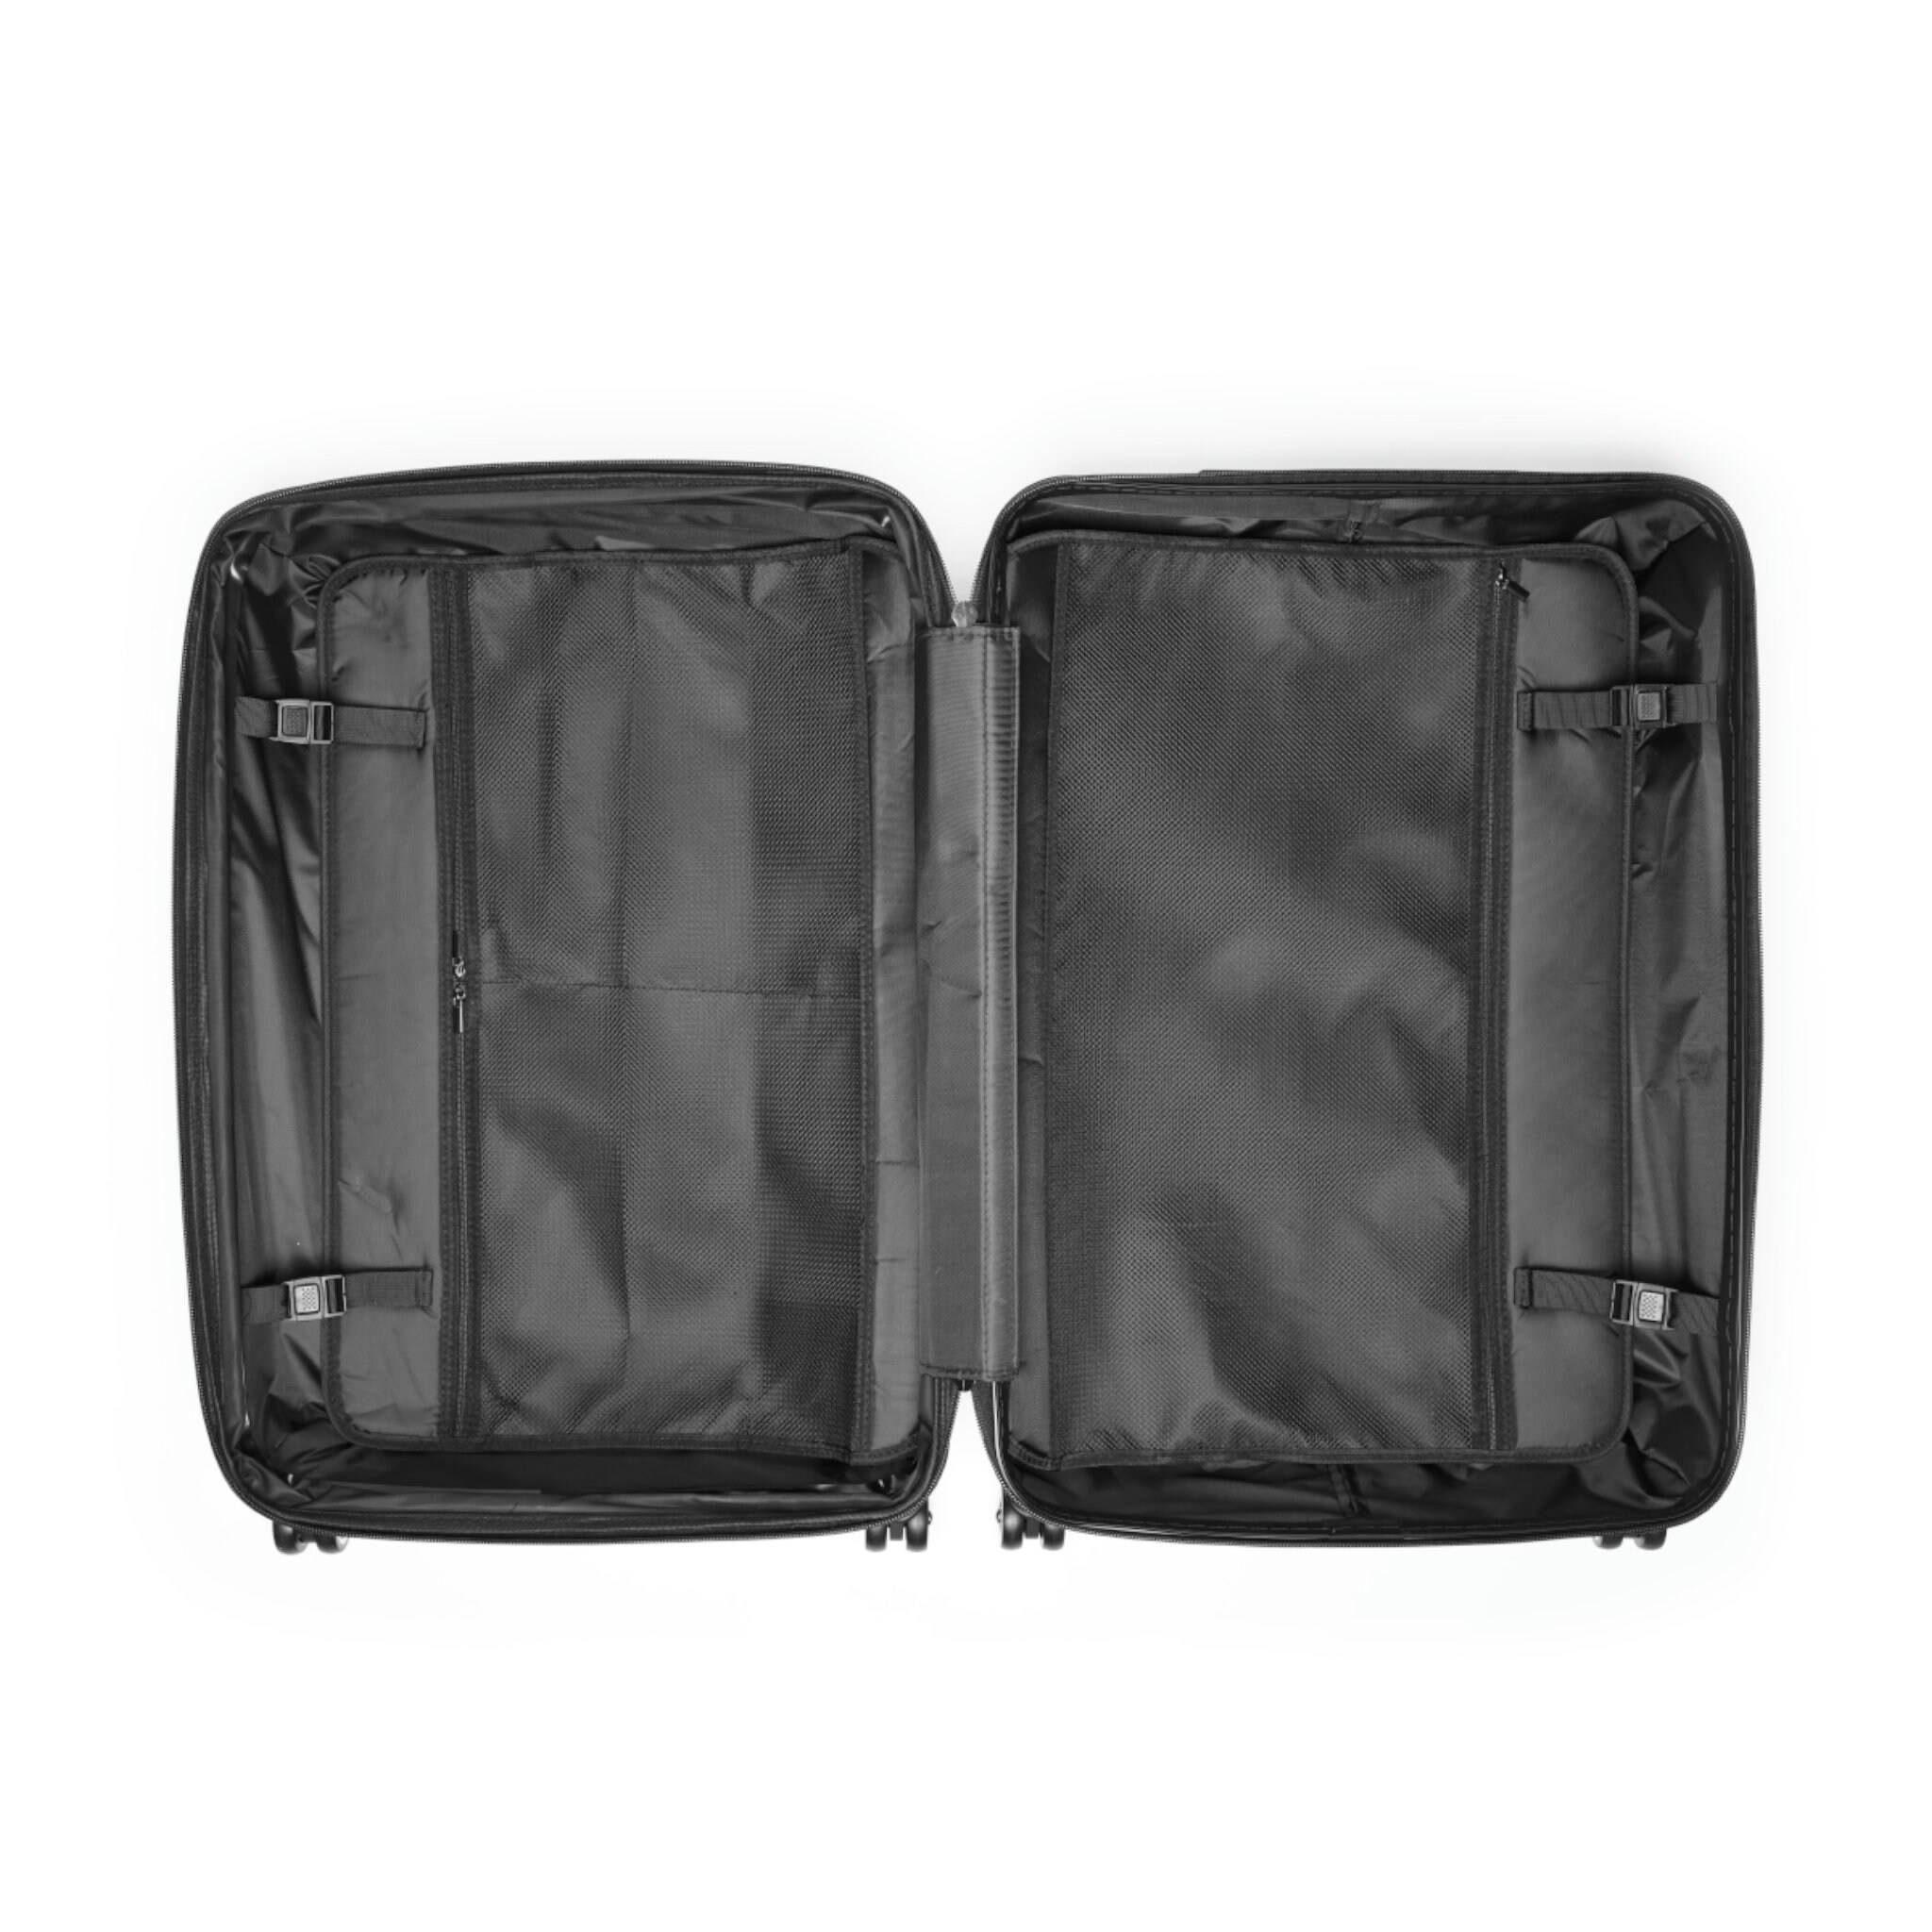 Supersonic Travel Suitcase, Travel Suitcase